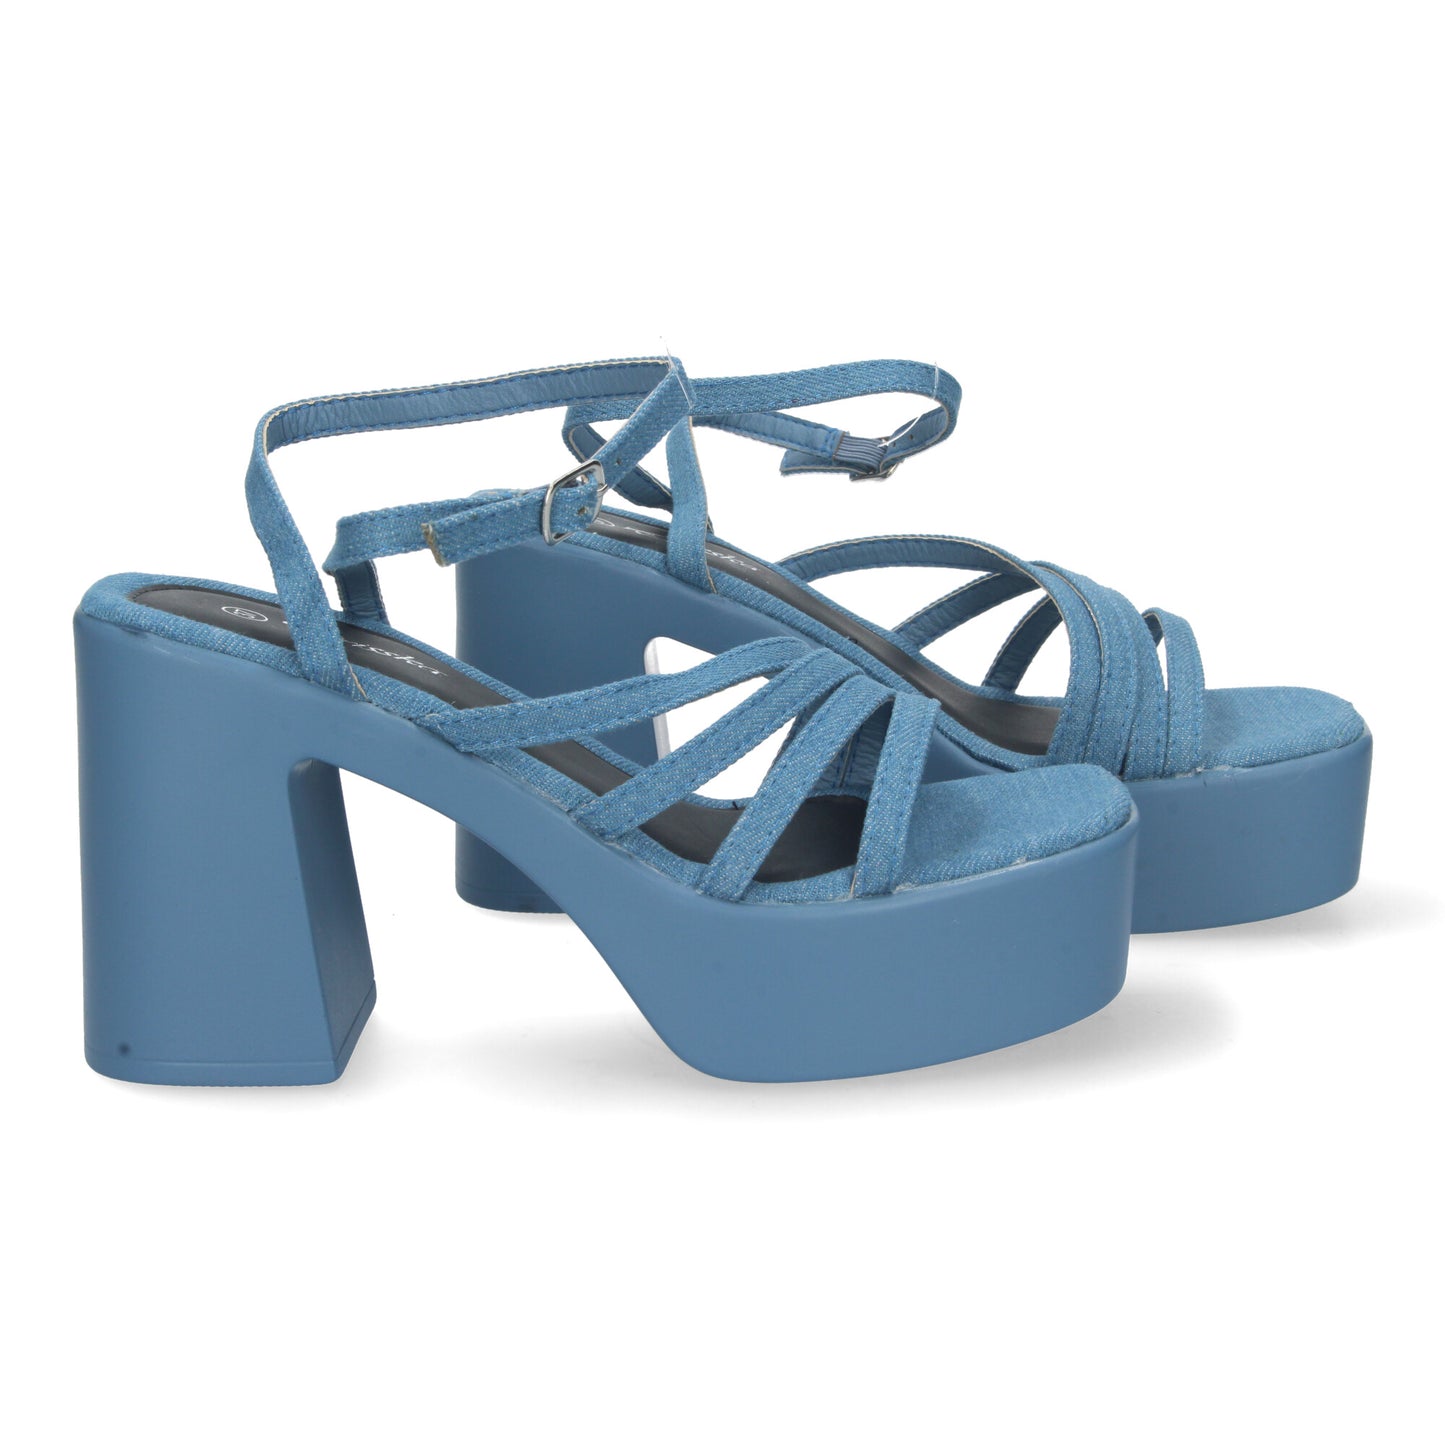 Sandalias de Plataforma tiras azul